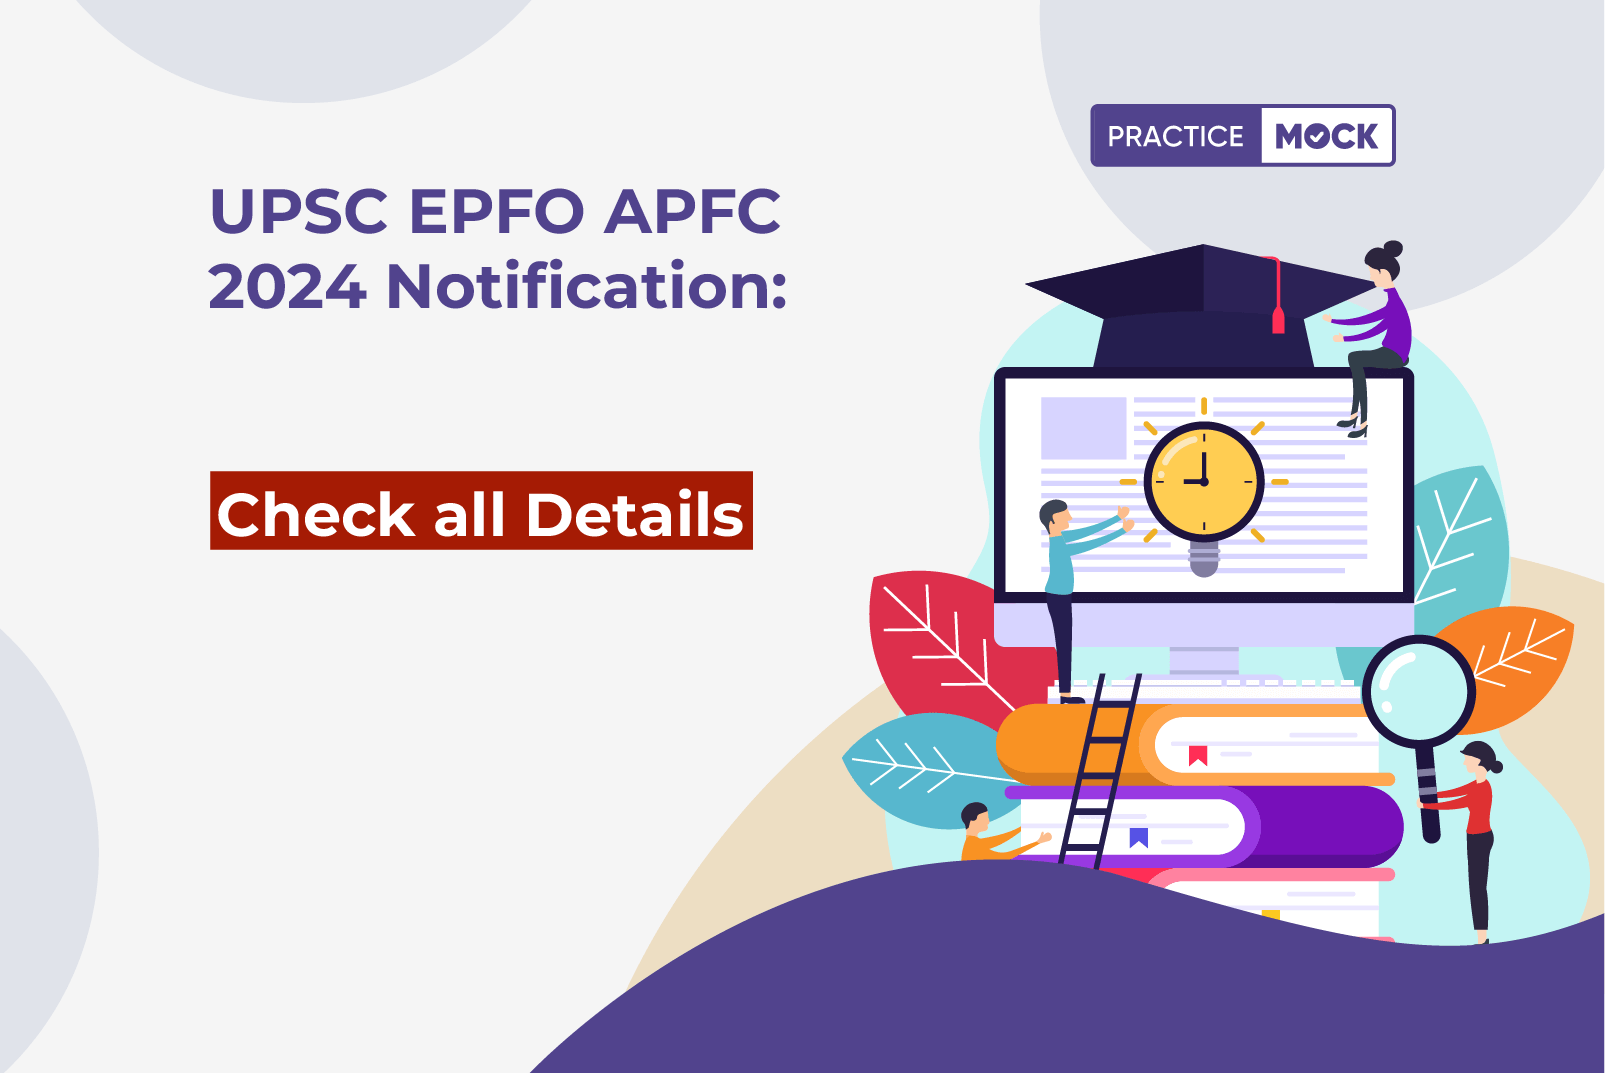 UPSC EPFO APFC 2024 Notification